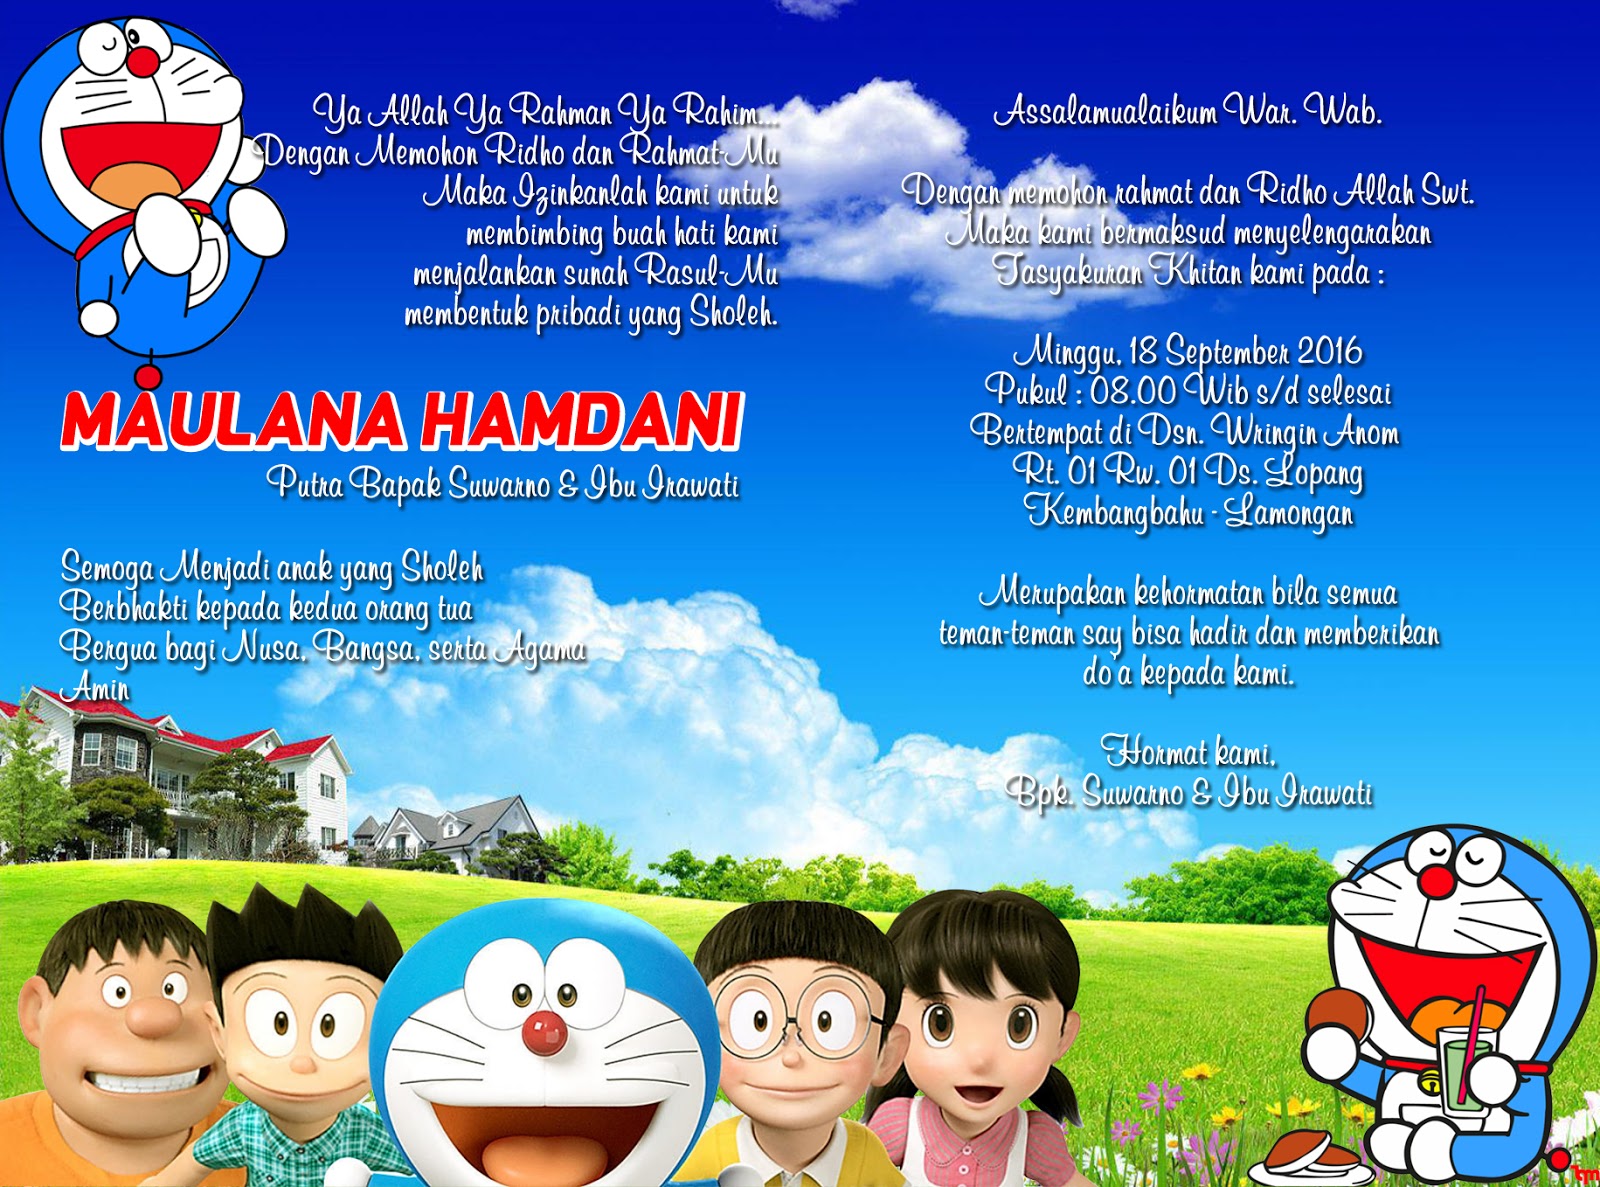 Nirwana Digital Print Undangan Model Doraemon